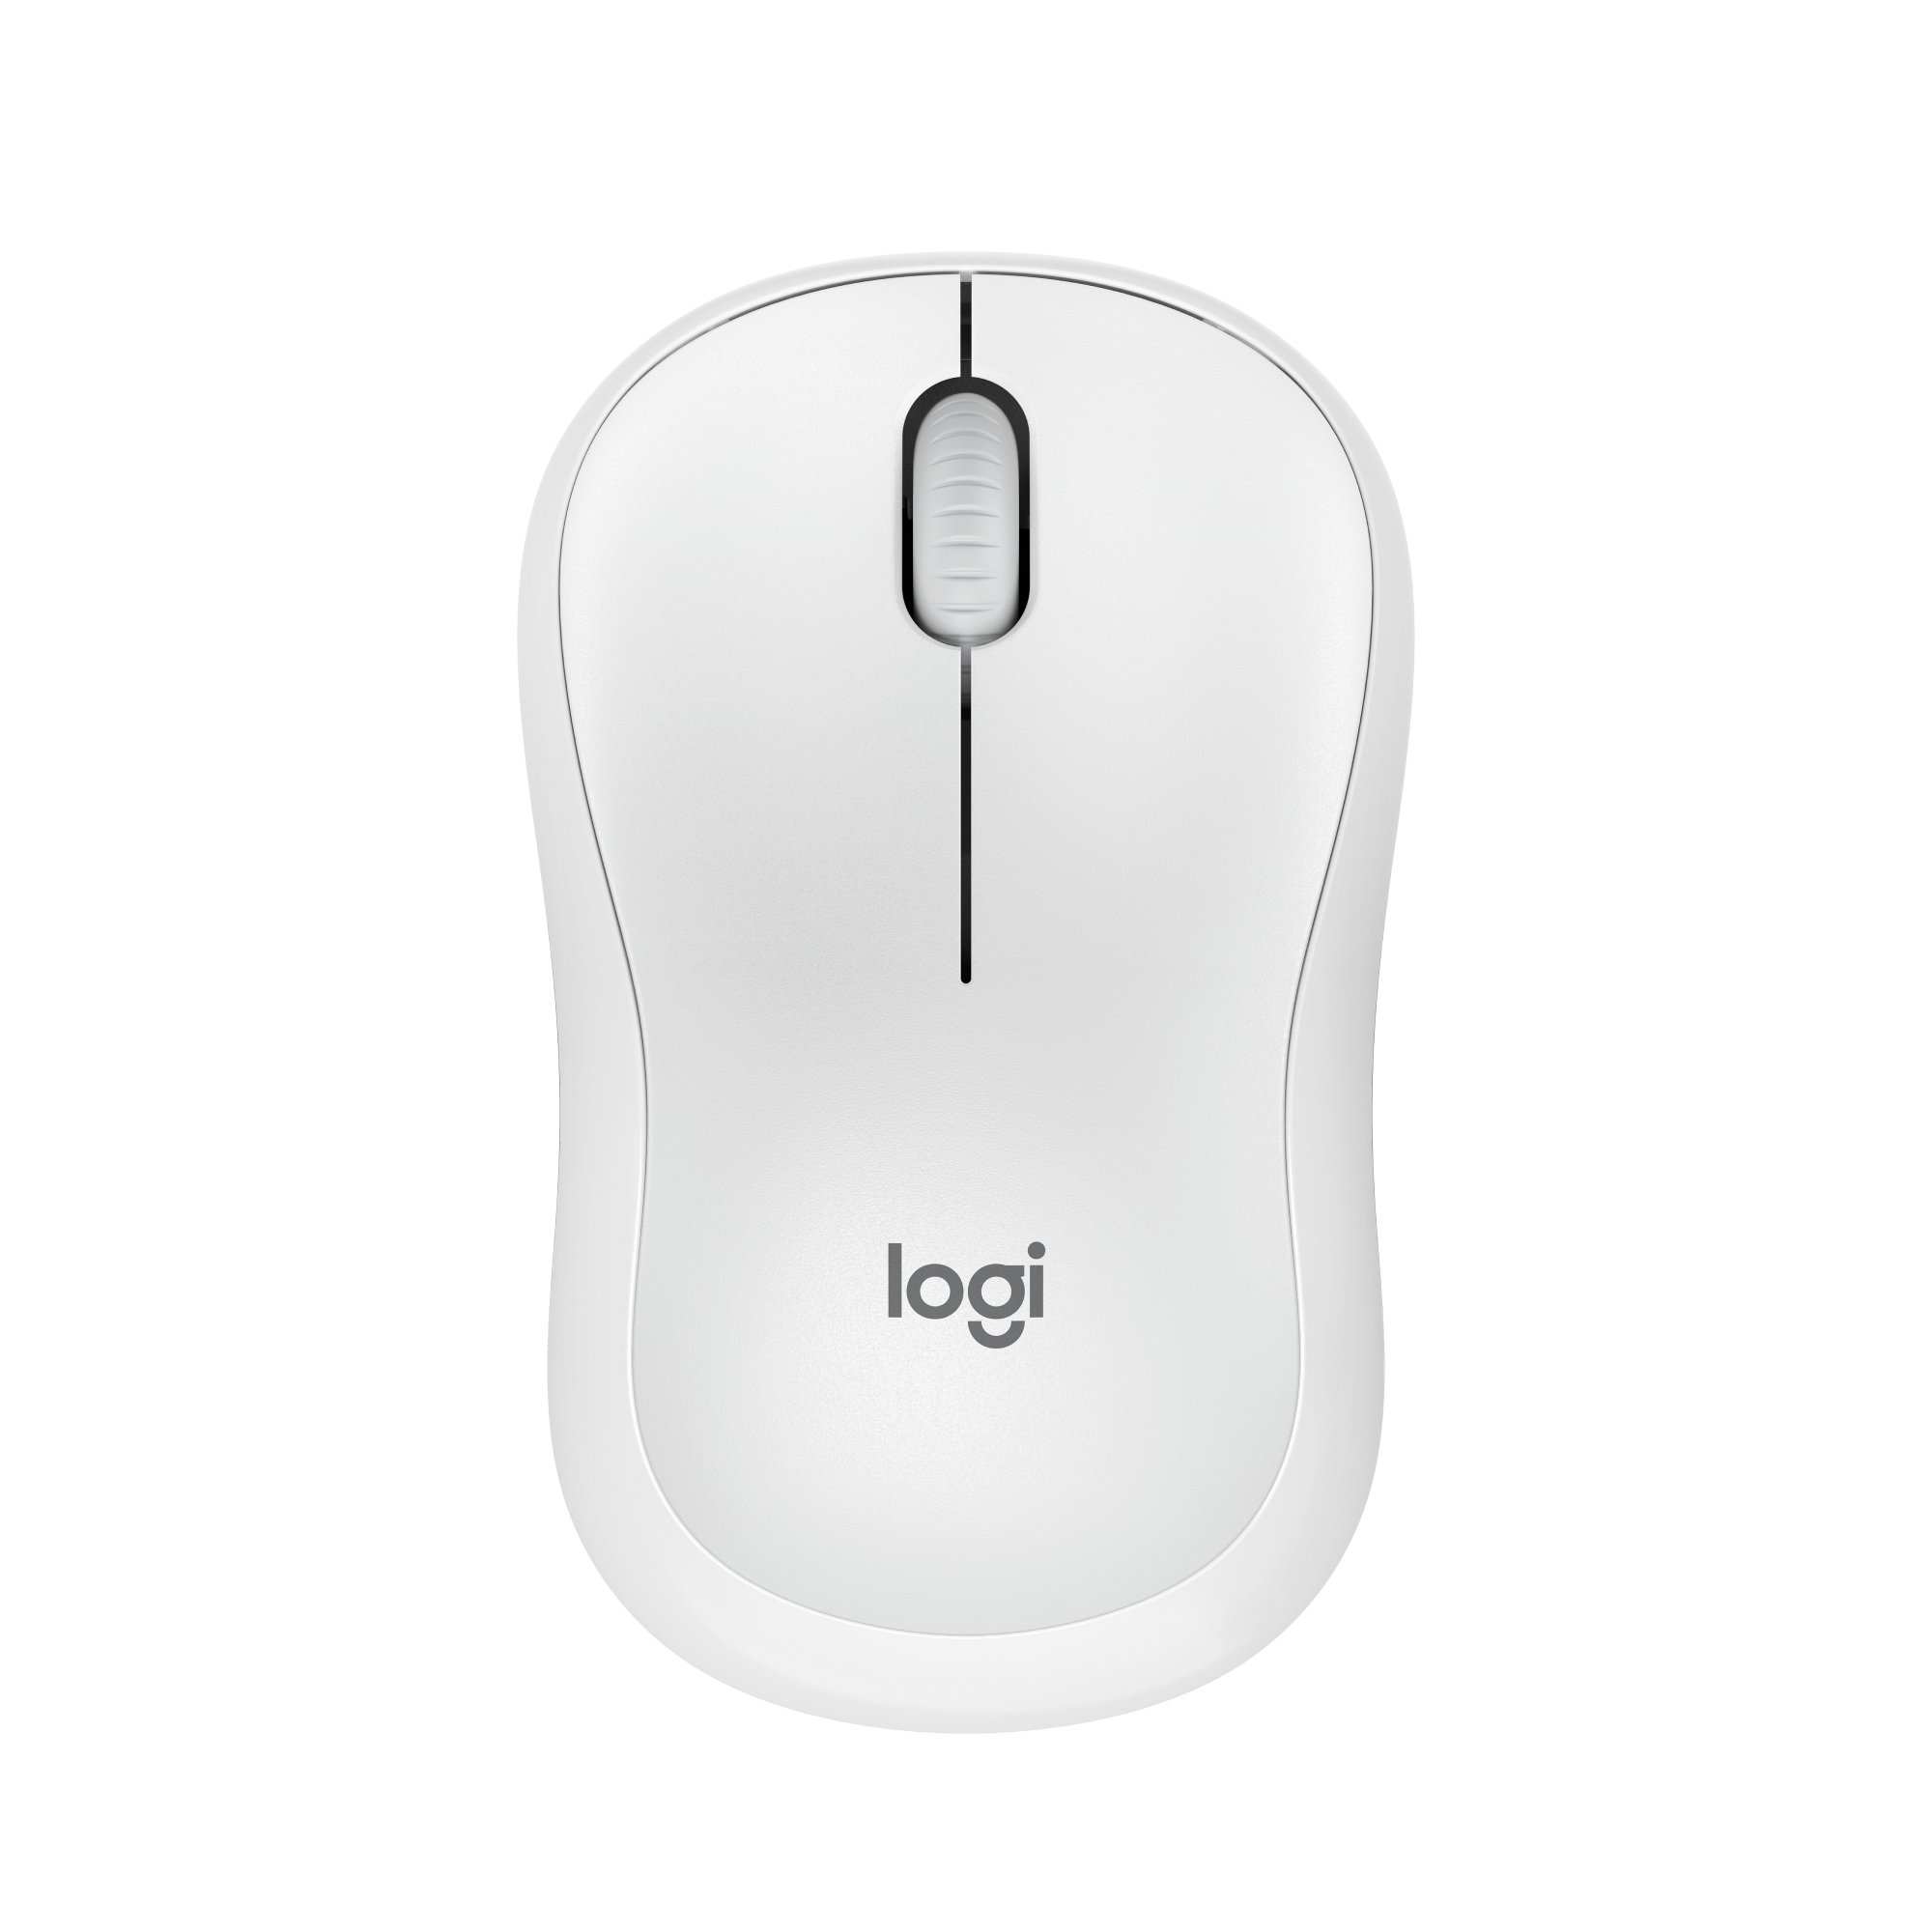 Logitech Mouse ZM240W / 910-007120 White